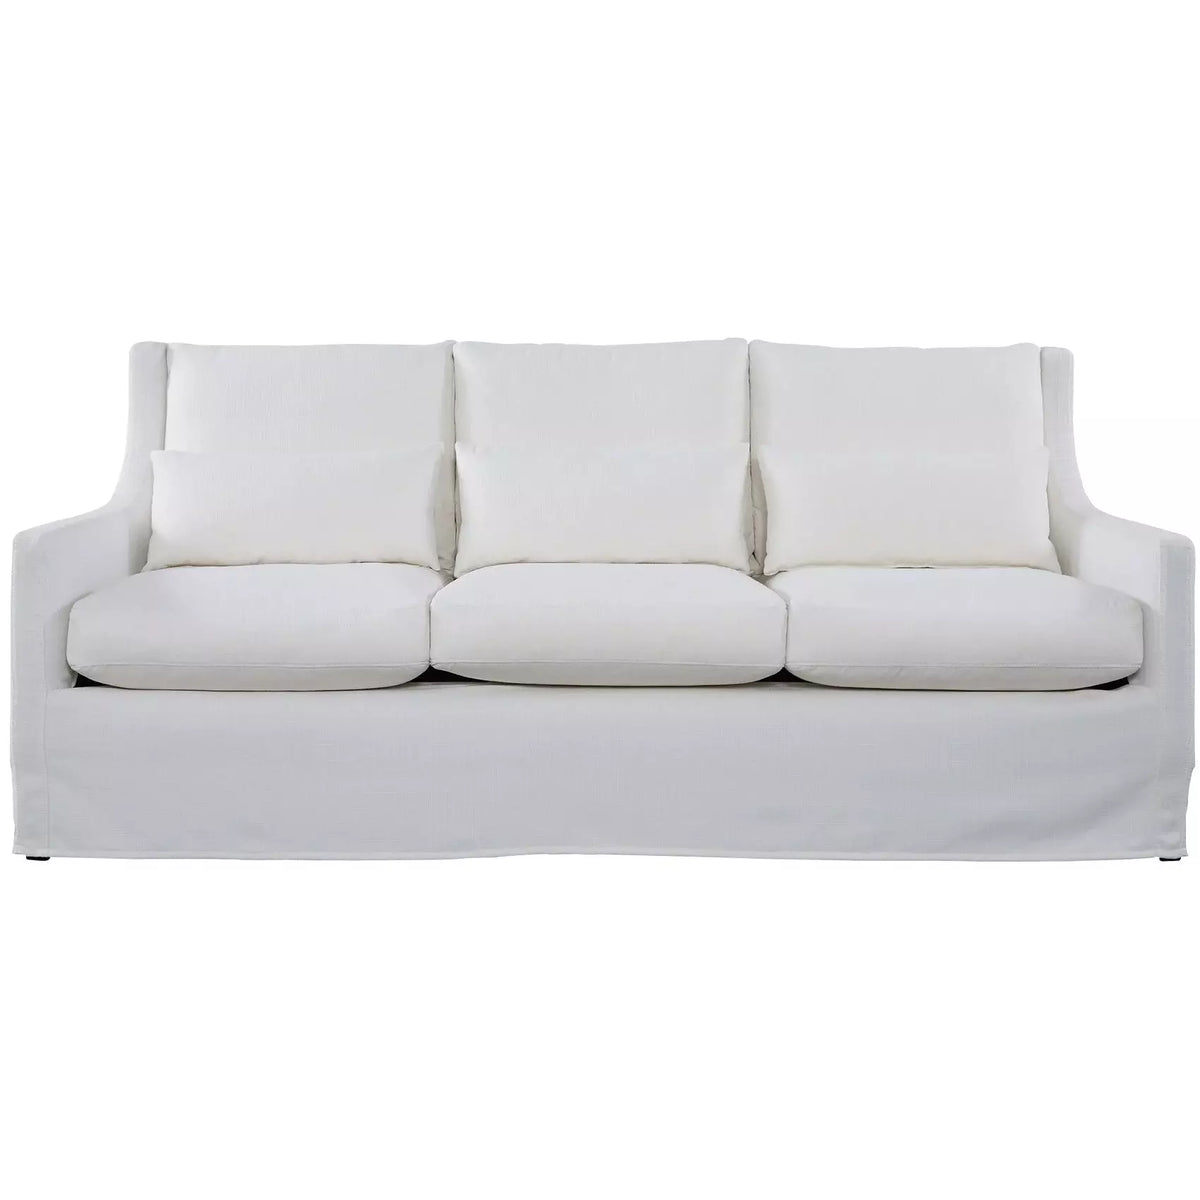 Sloane Sofa - Be Bold Furniture